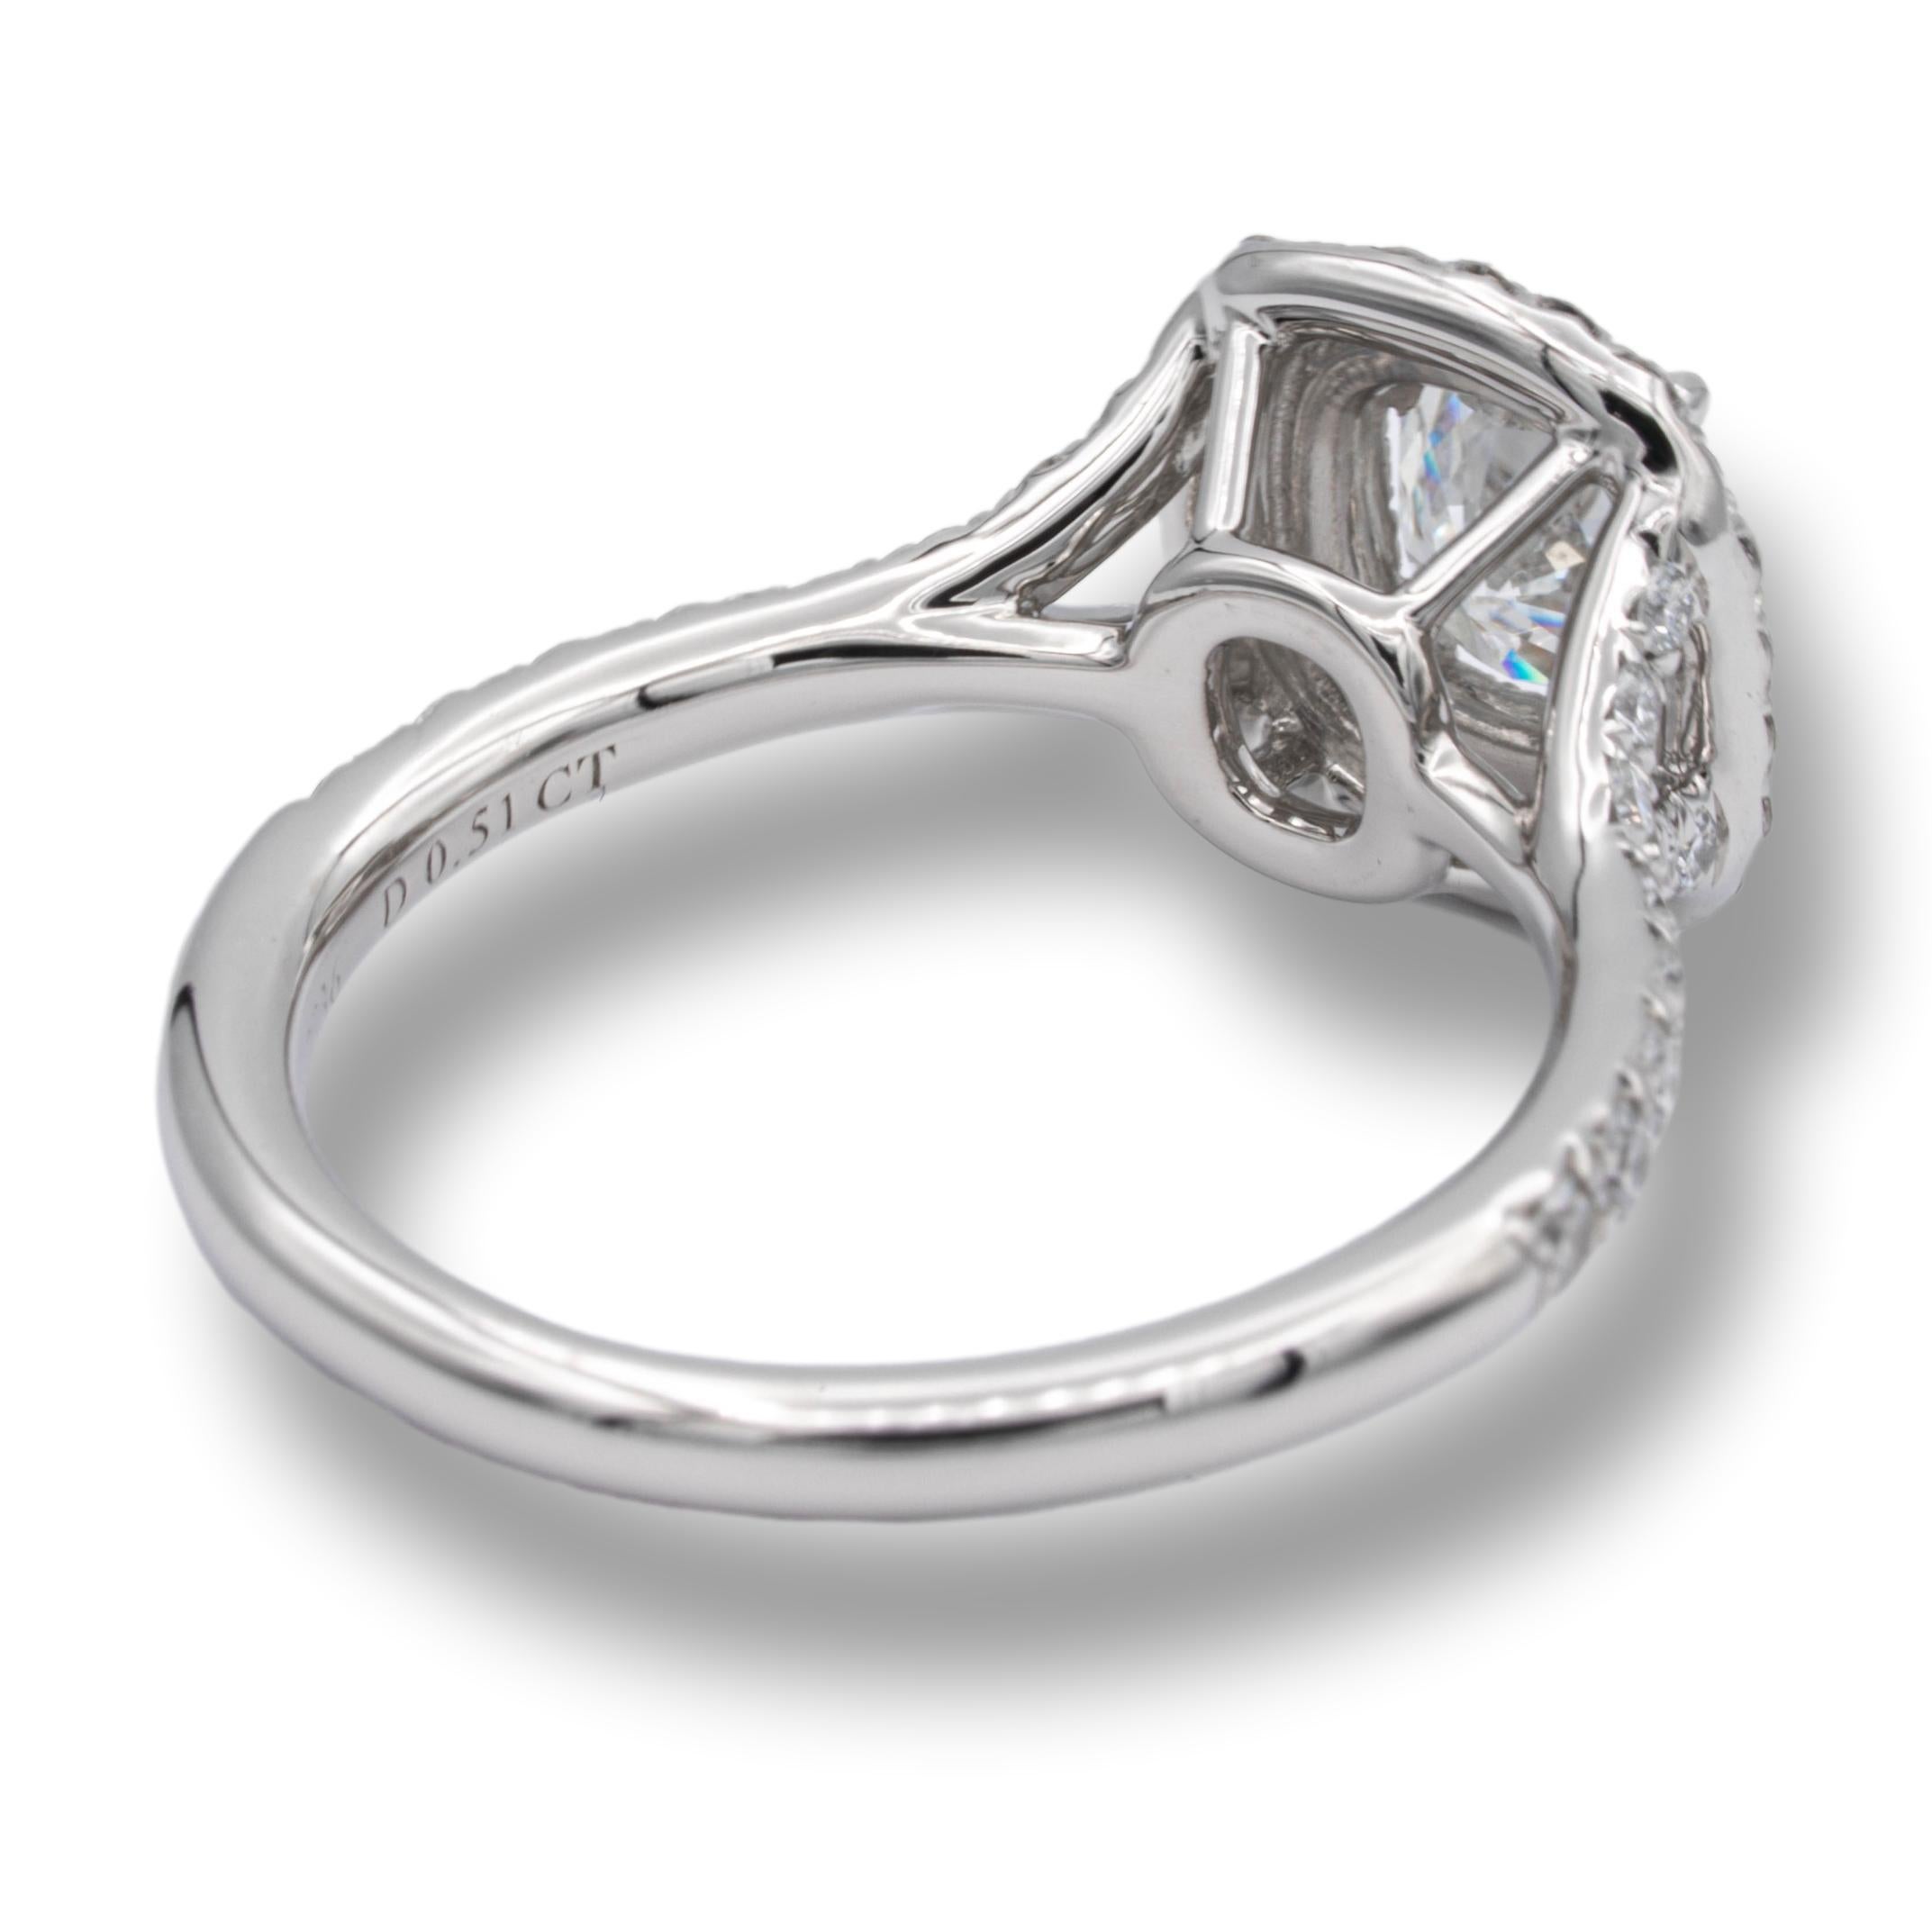 Cushion Cut Tiffany & Co. Double Soleste Platinum Diamond Engagement Ring 0.86 Carats Total